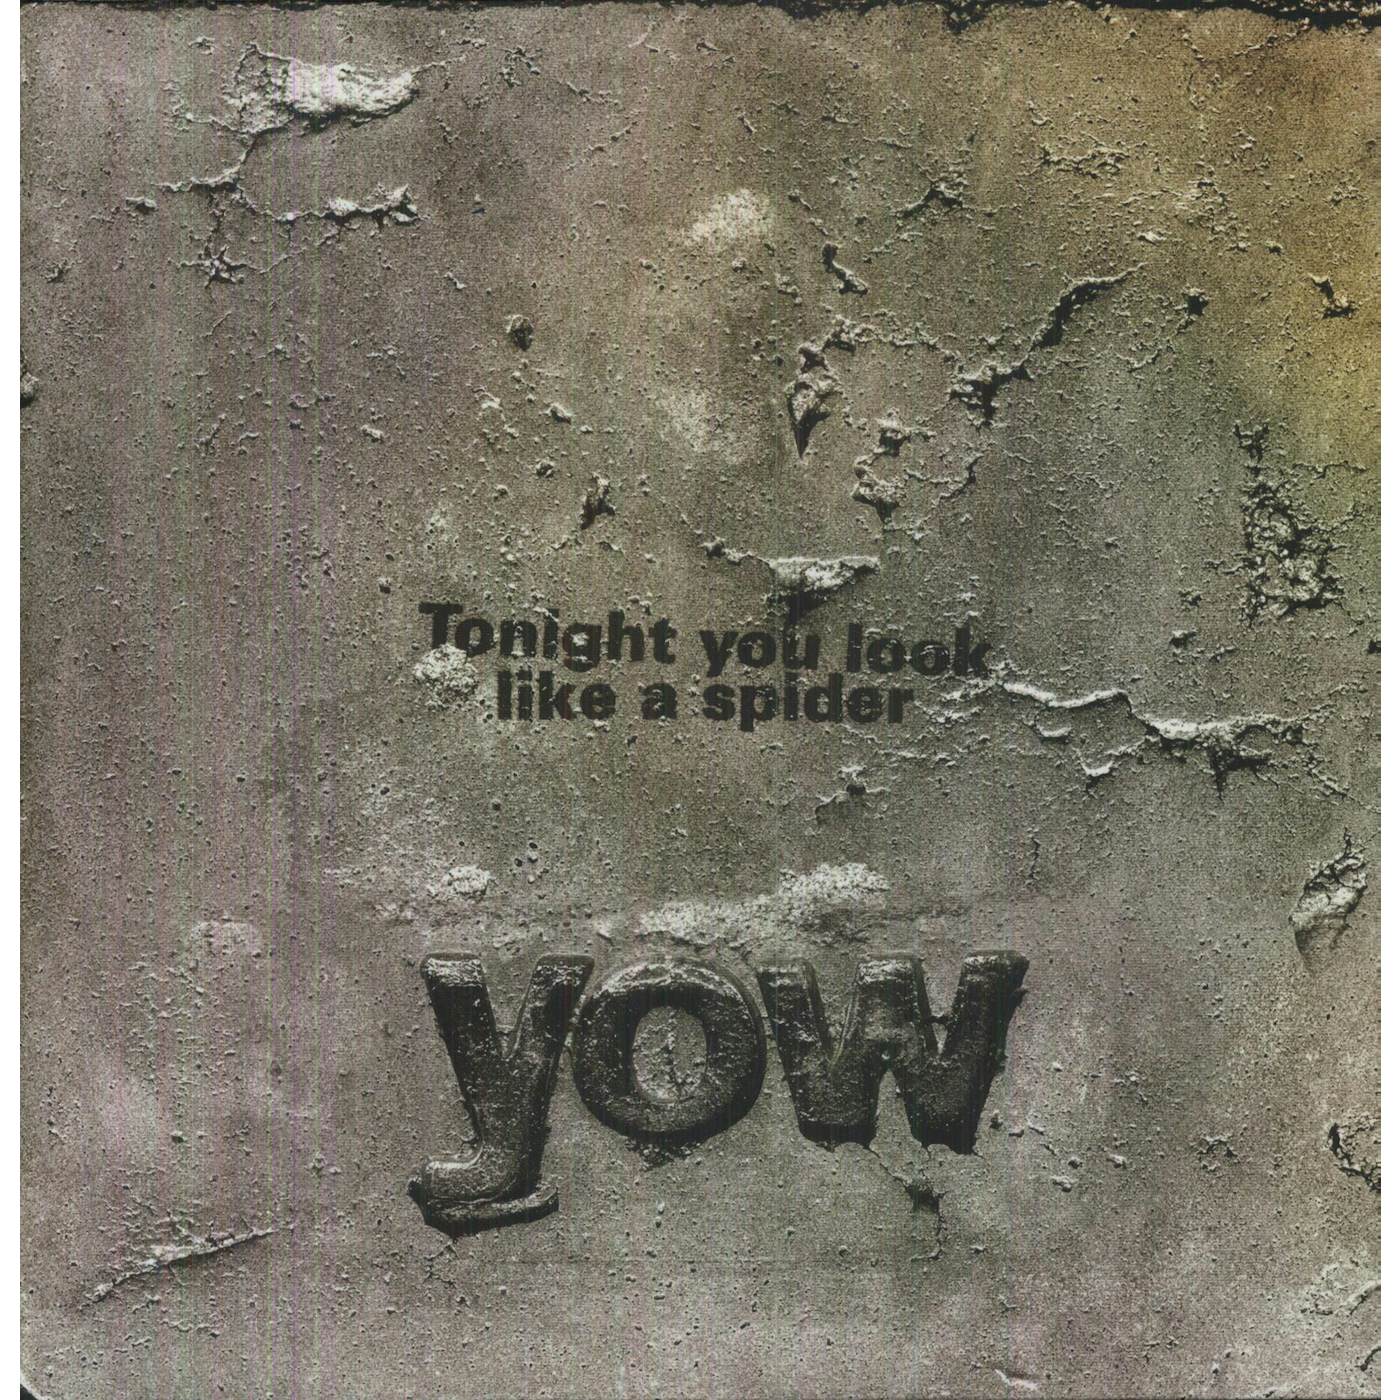 David Yow Tonight You Look Like A Spider Vinyl Record